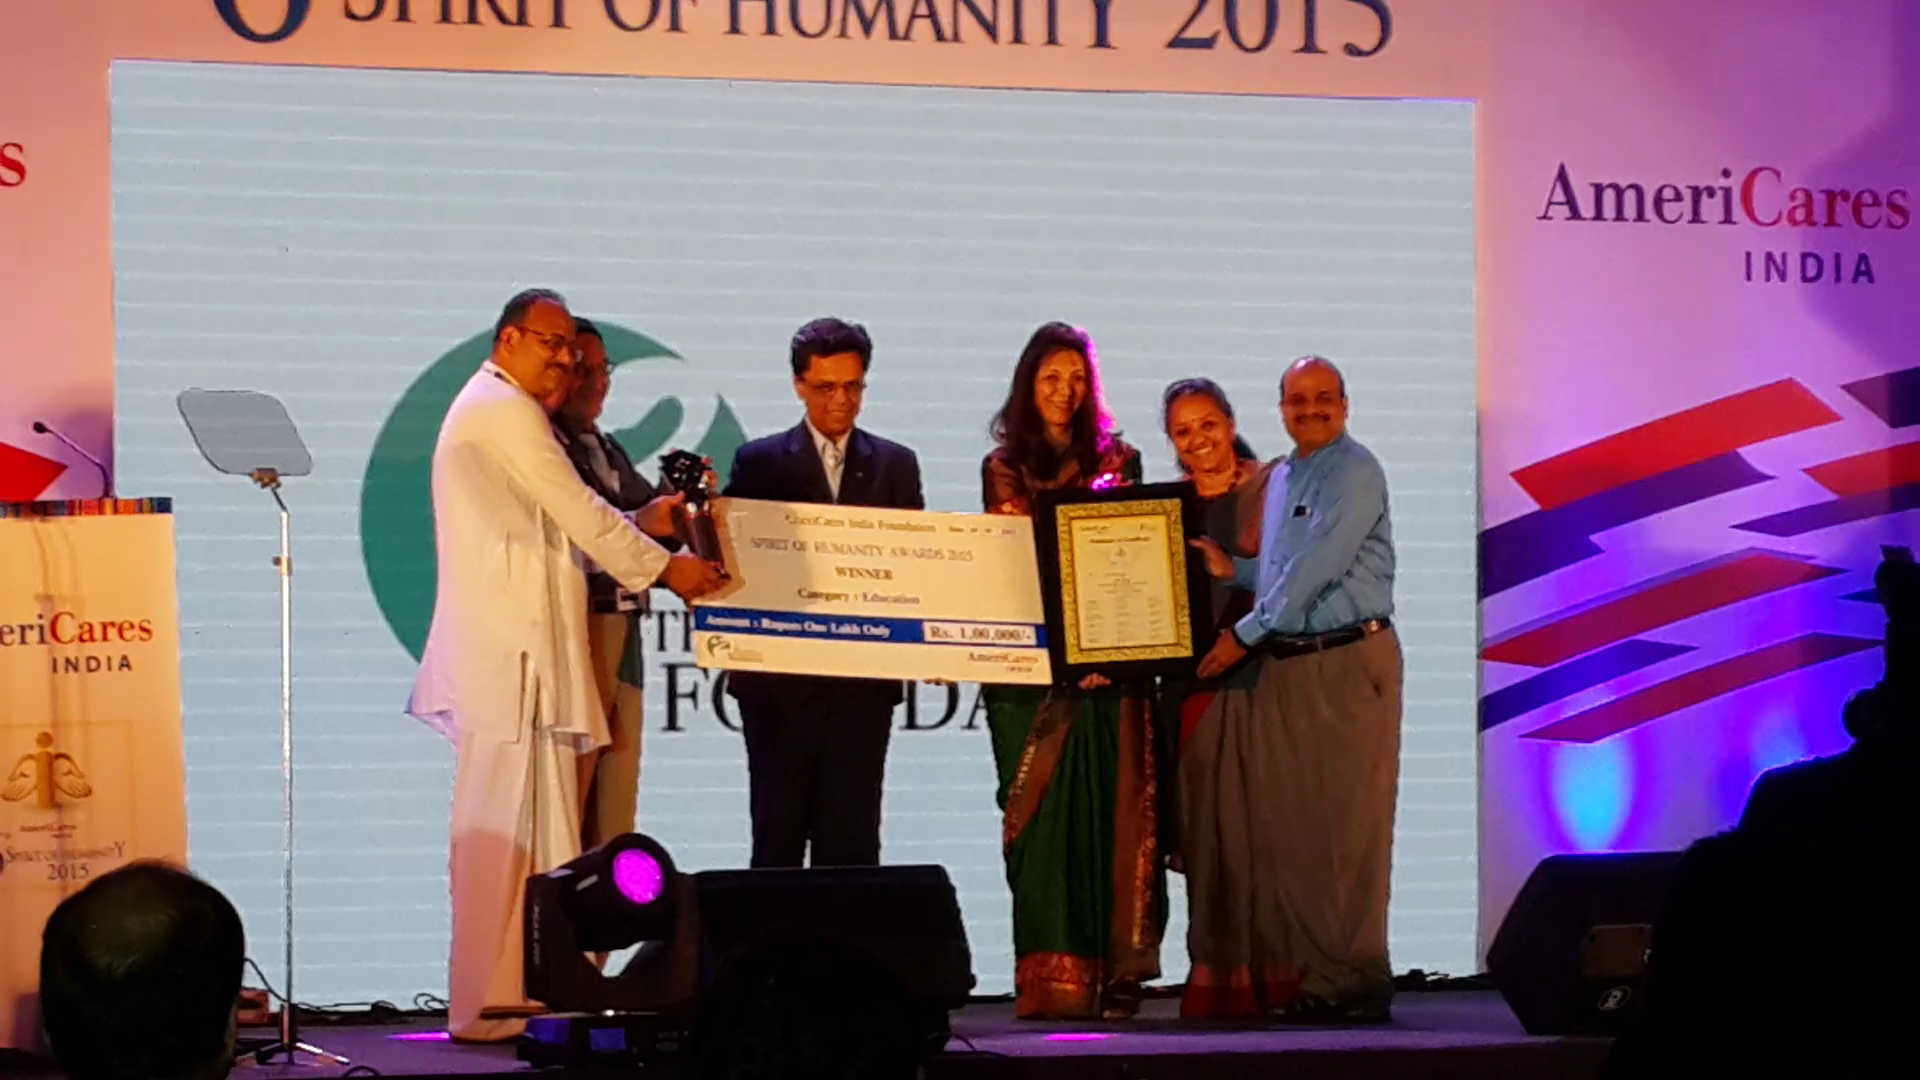 Sprit of humanity - AmareCare award (1)